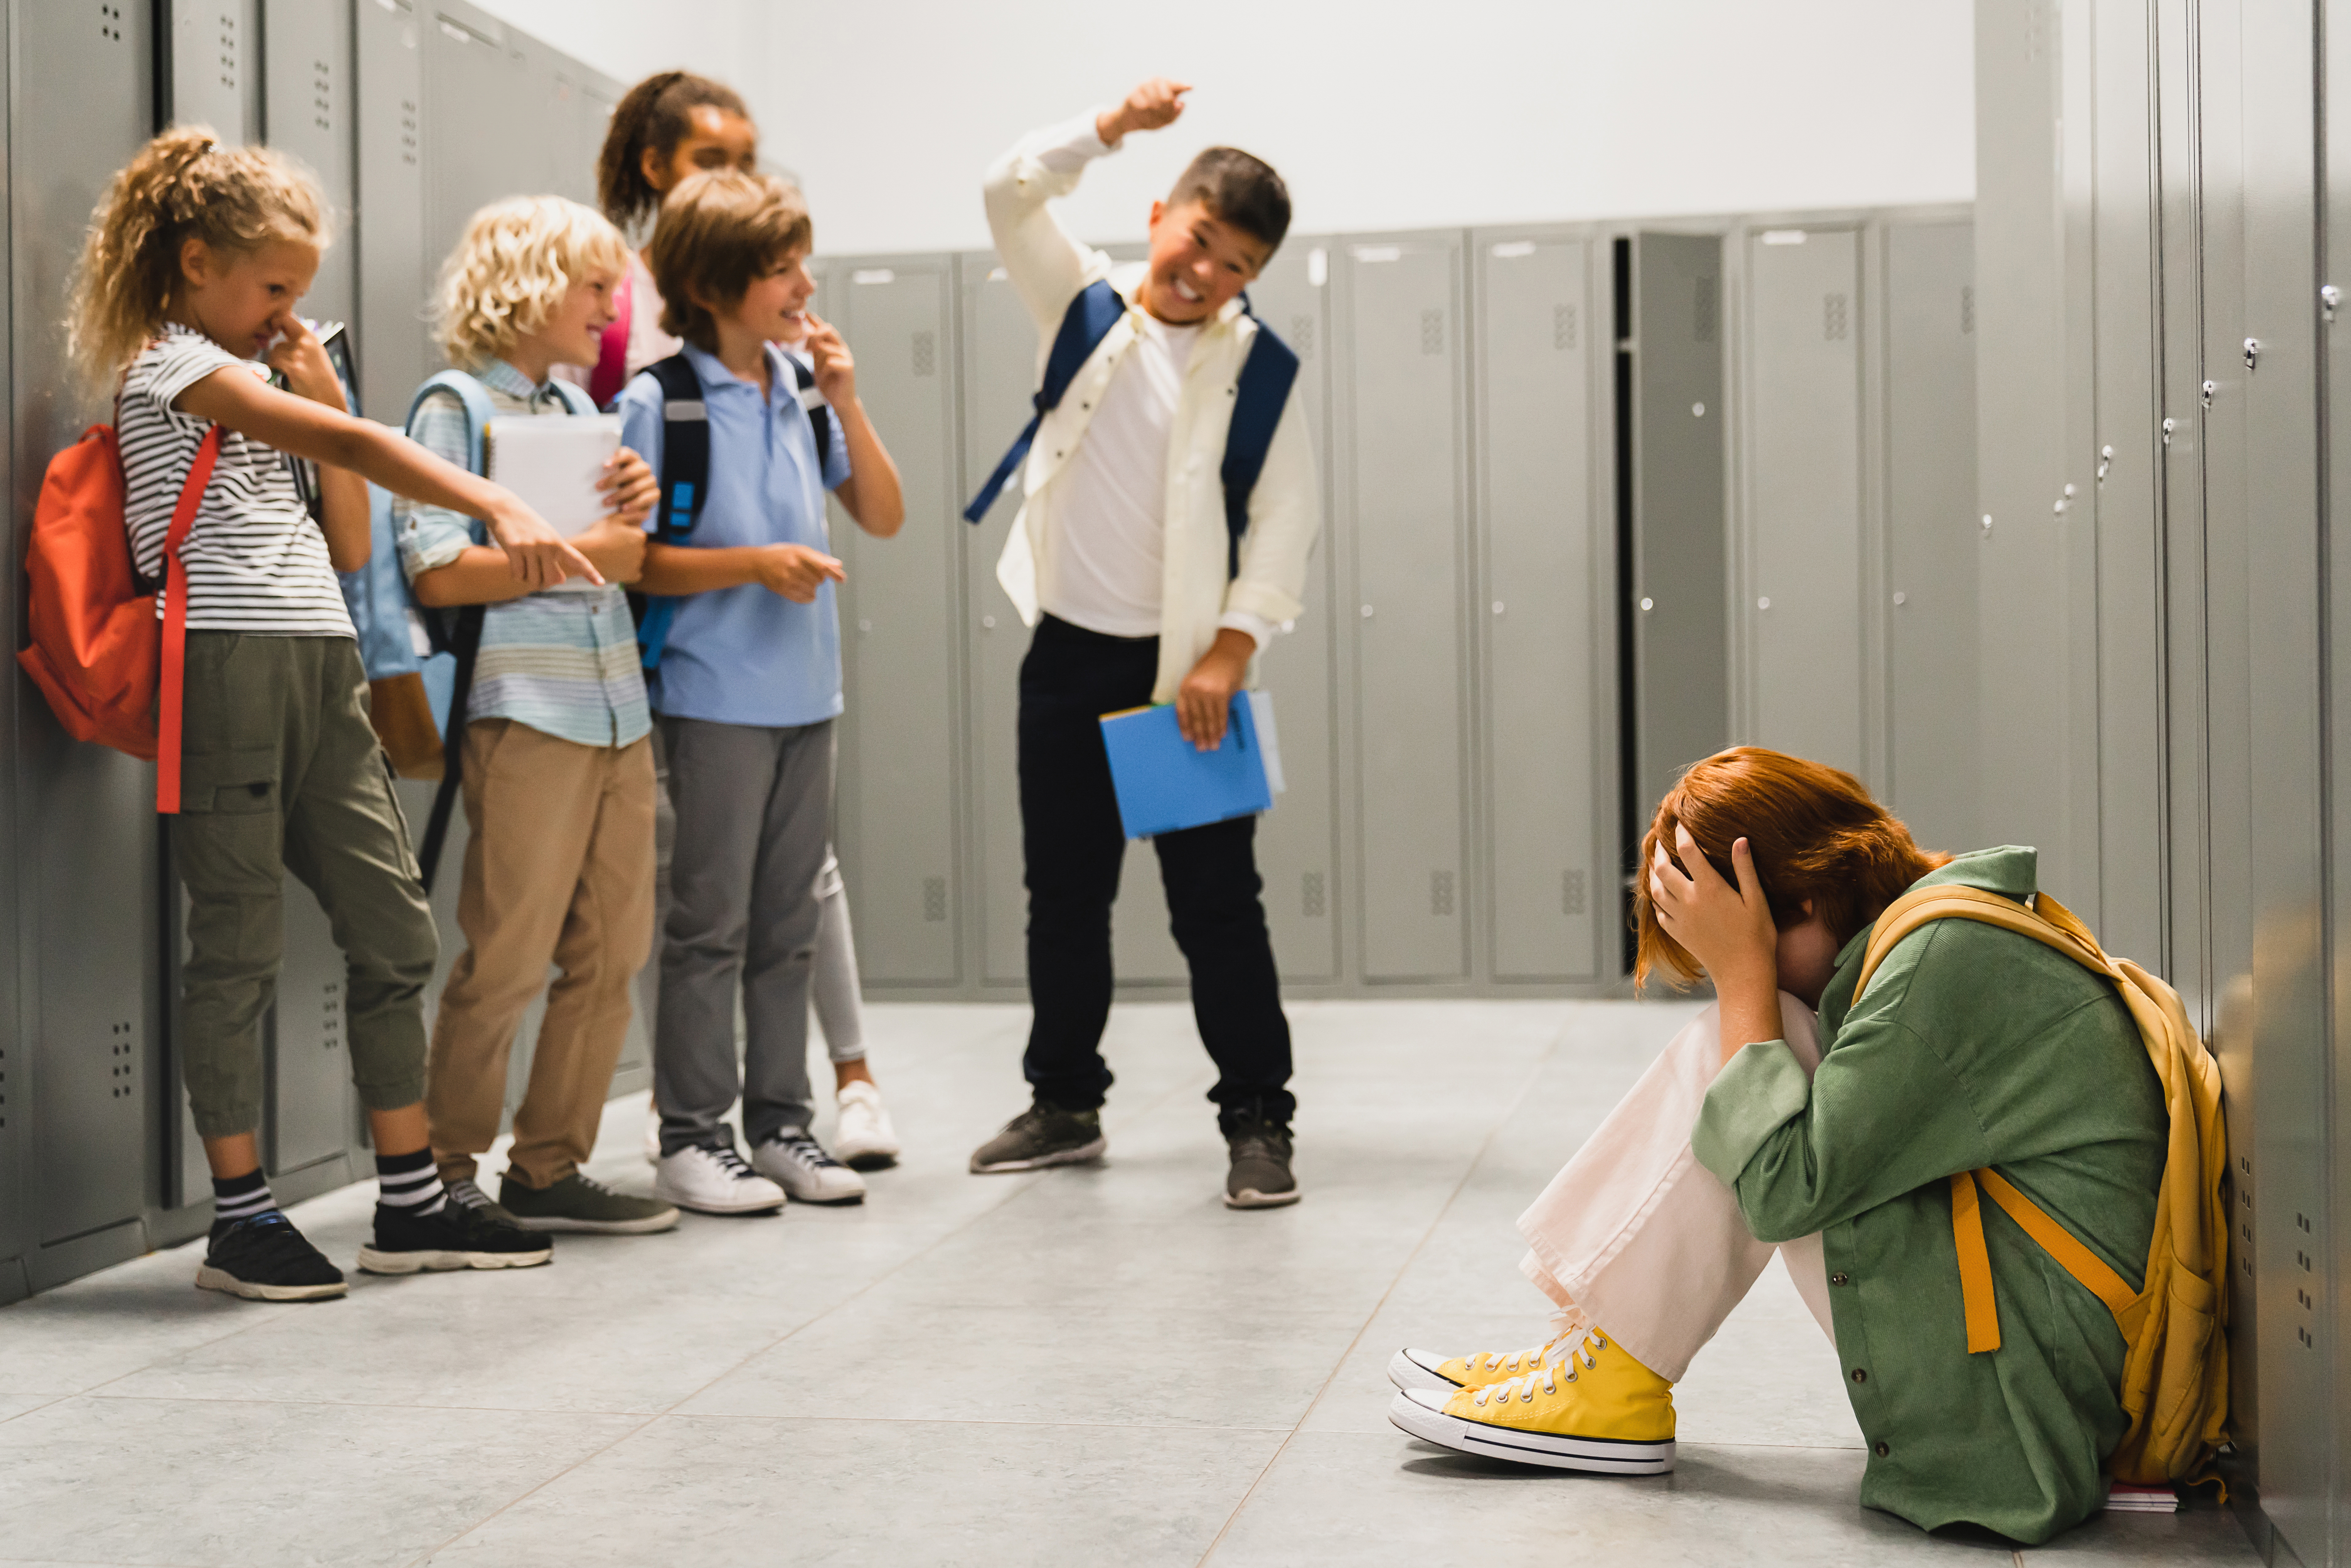 School children bullying a student | Source: Shutterstock